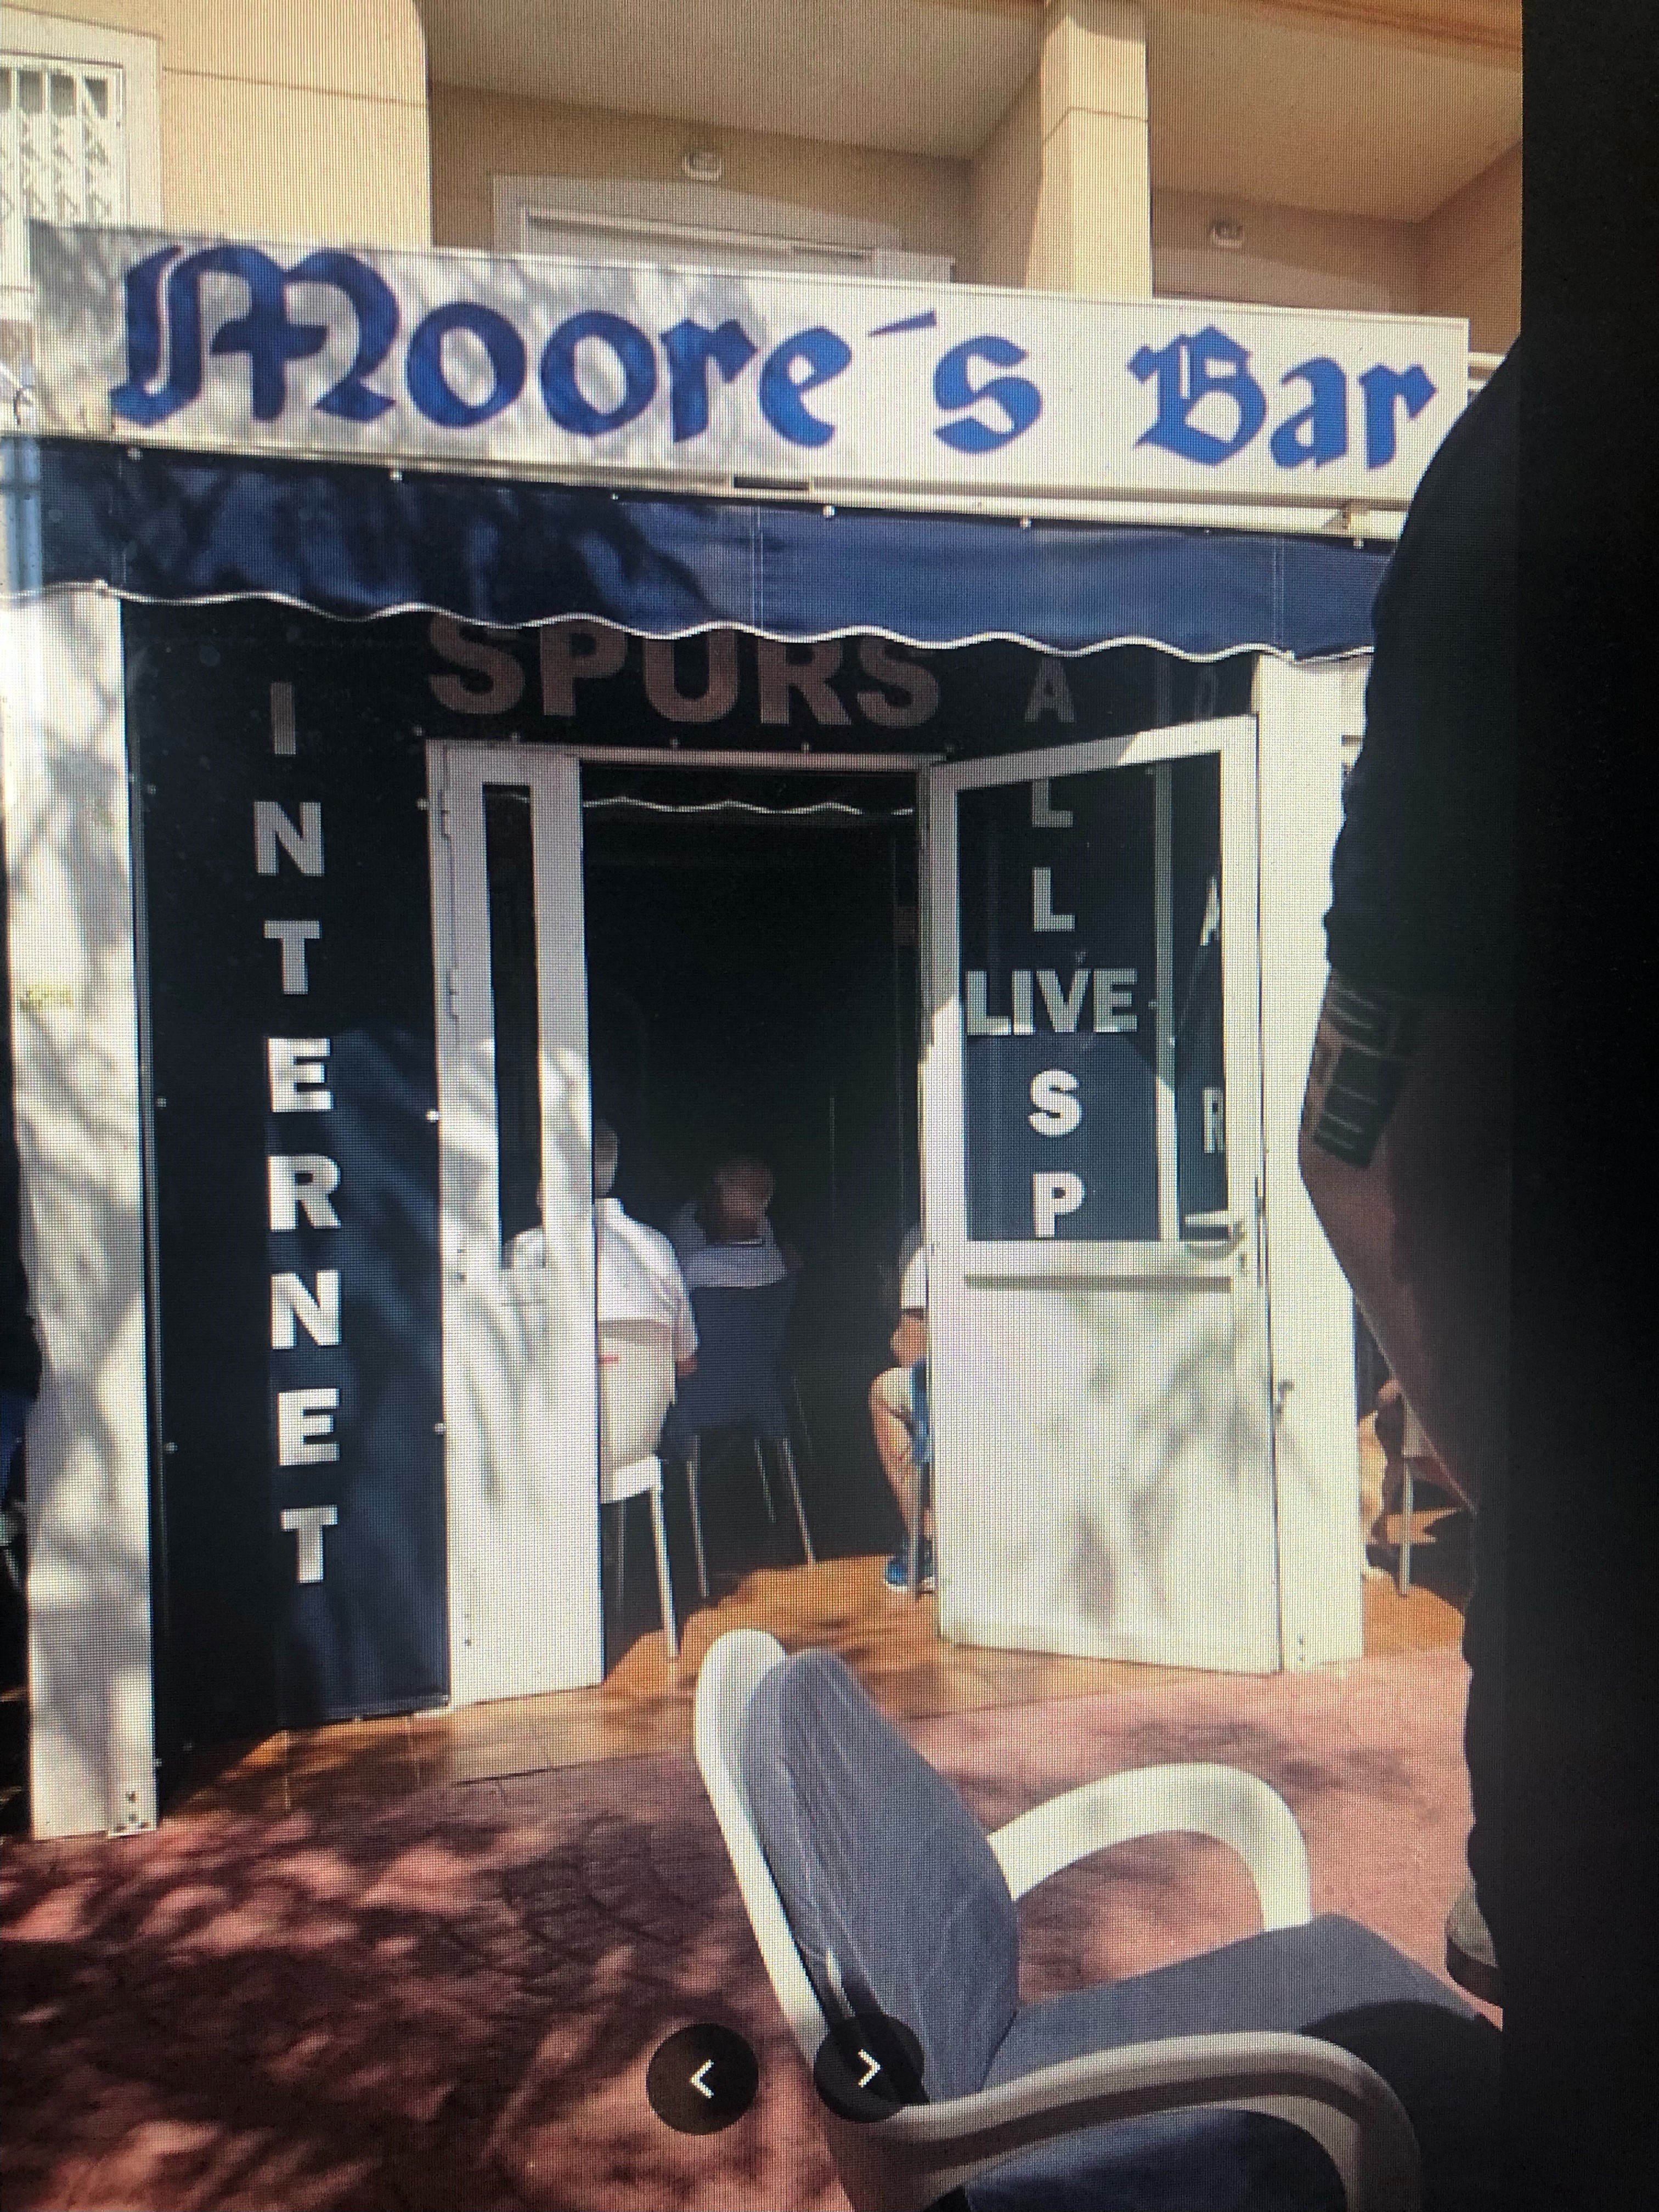 Moores Bar.jpg